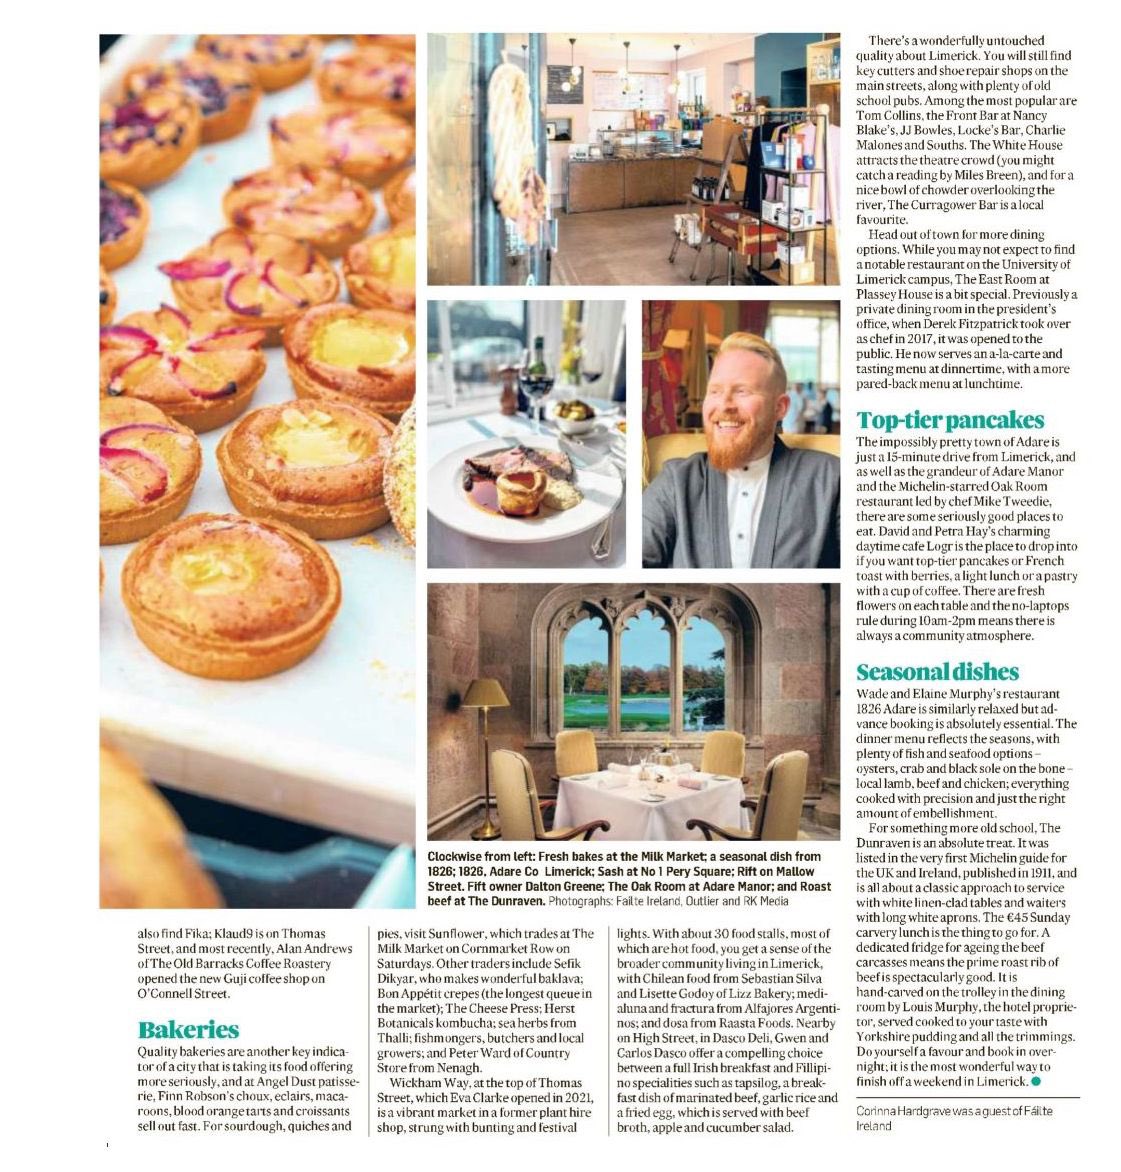 Love to see our Limerick food scene featured in @IrishTimes Magazine! #eatinlimerick @TreatyCityBrew @OnePerySquare @NewLeafUrbnFarm @Riftcoffeeltd @wearecanteen @itsallguji @TheMilkMarket @BonAppetitCrepe @WickhamWay @DascoDeli @EastRoomRest @CafeLogradare @1826Adare